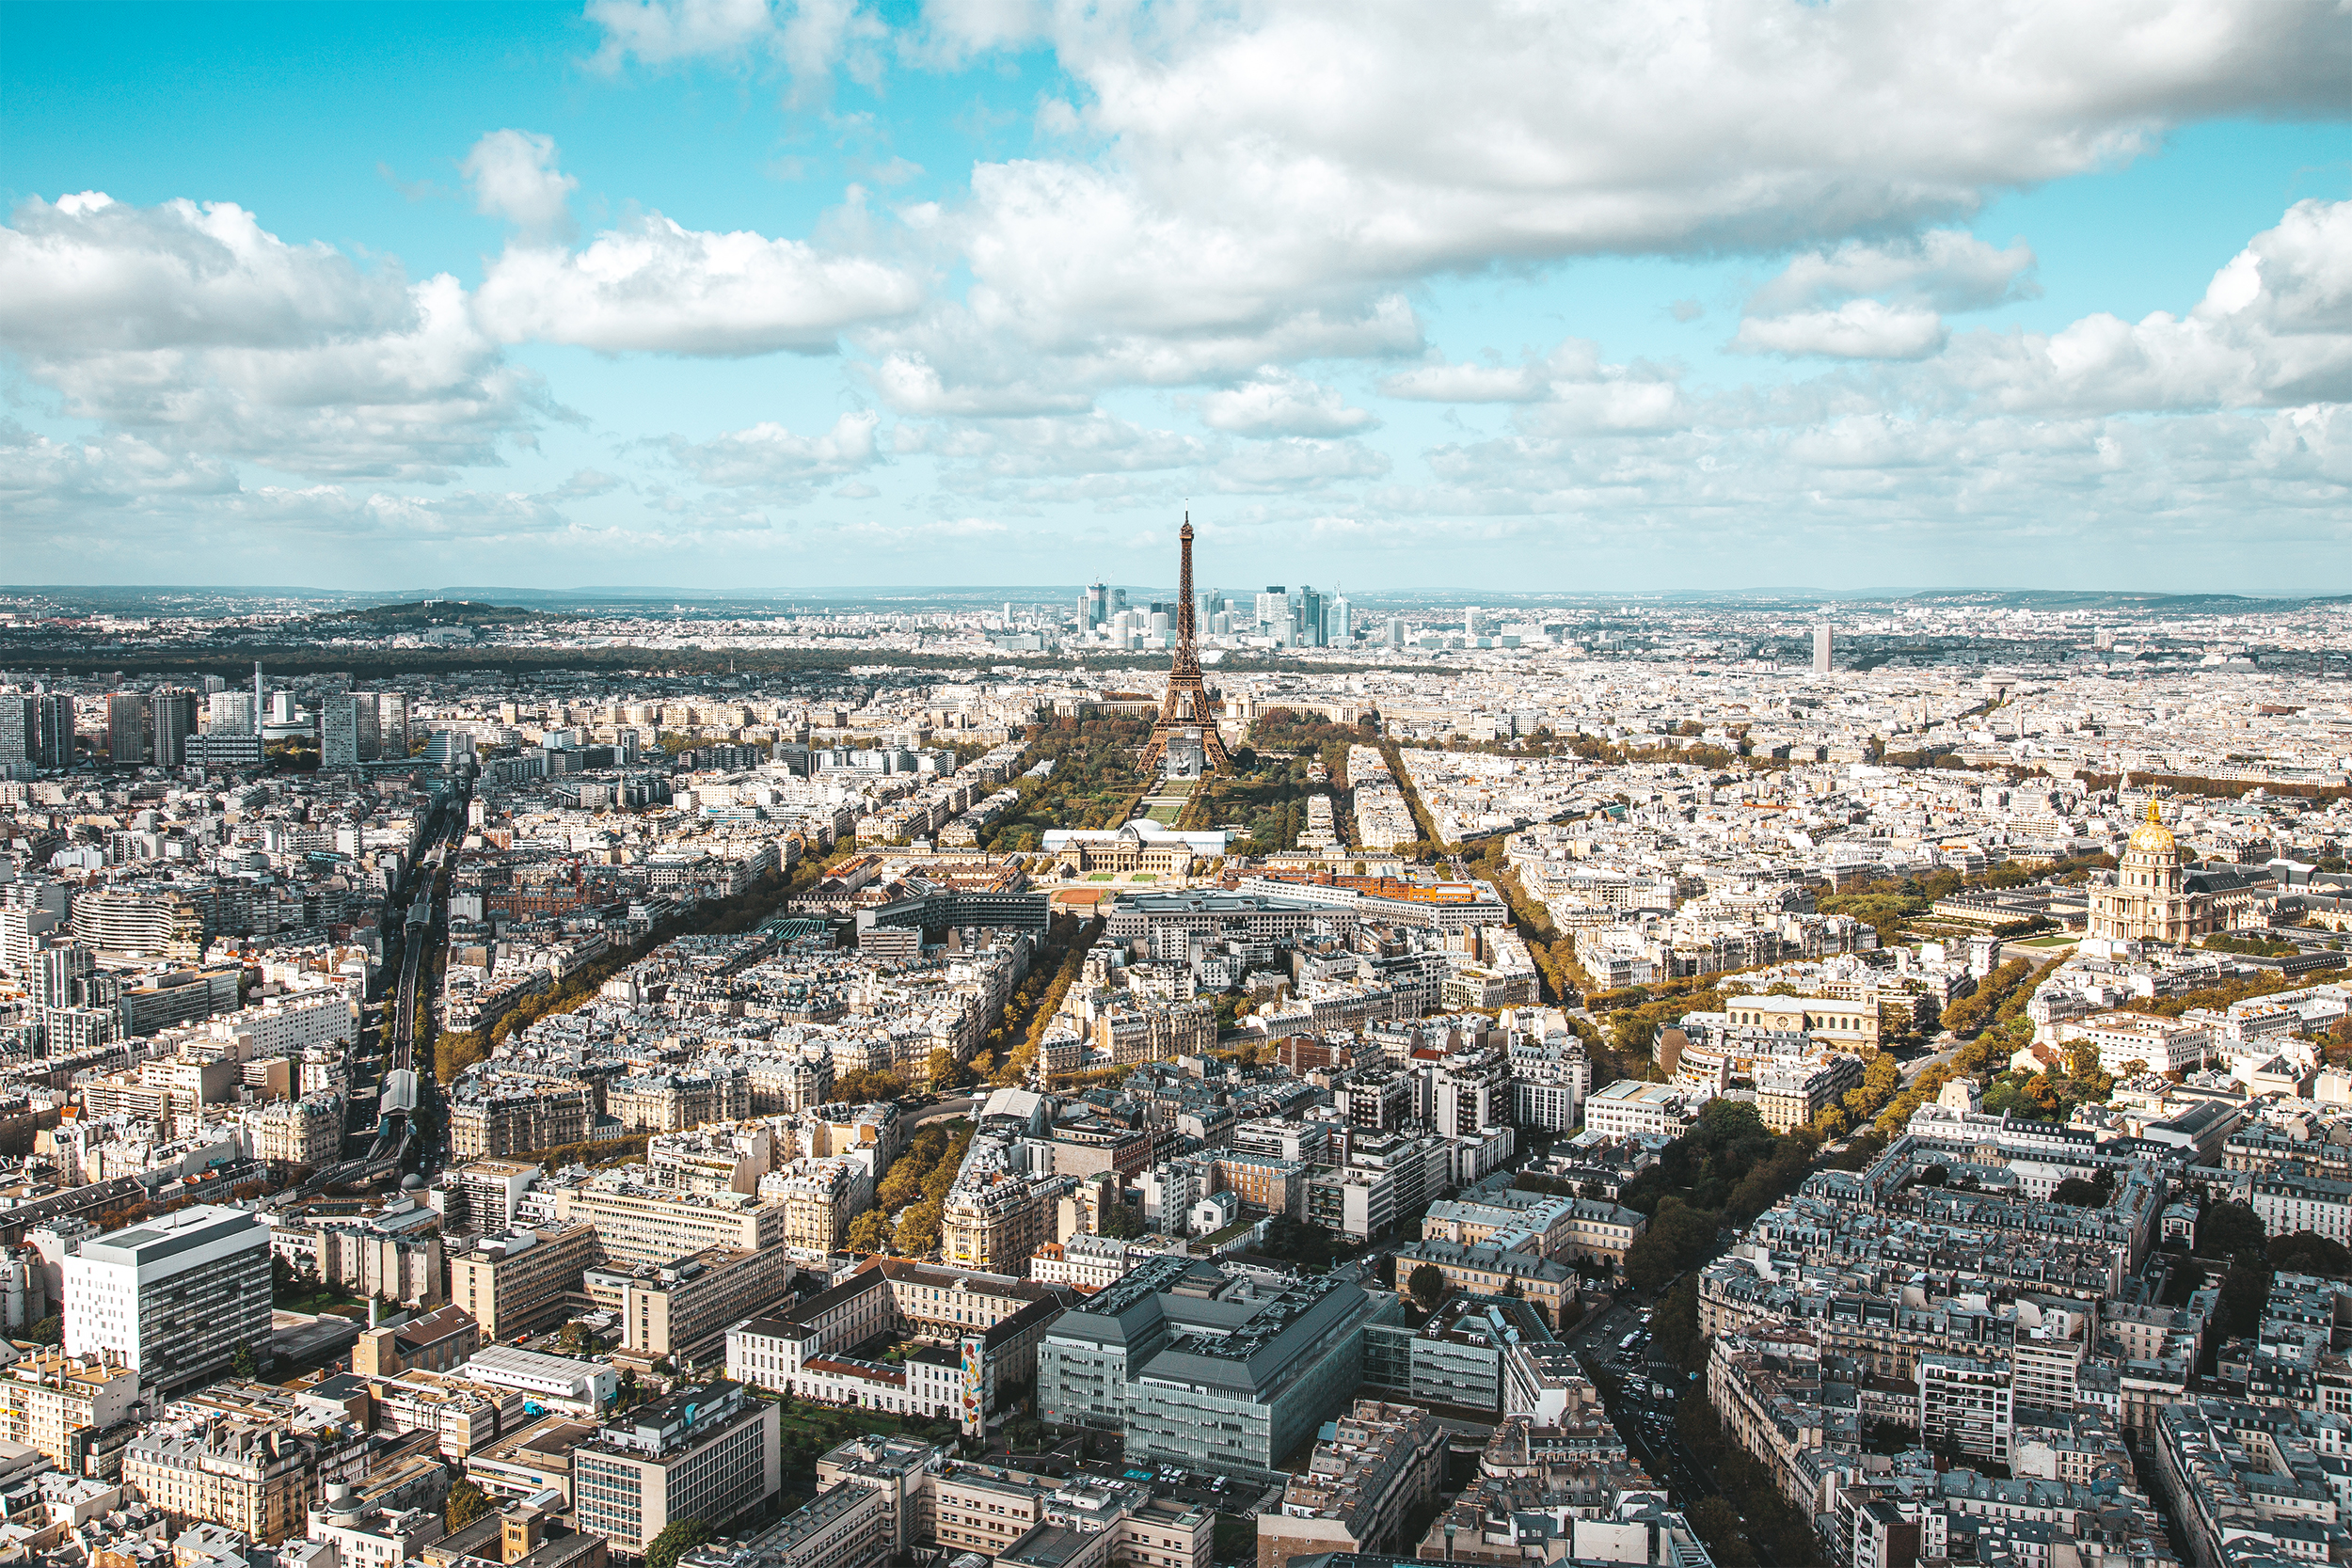 Paris Viewpoint I 
© Marielle Janotta - My Travel Island